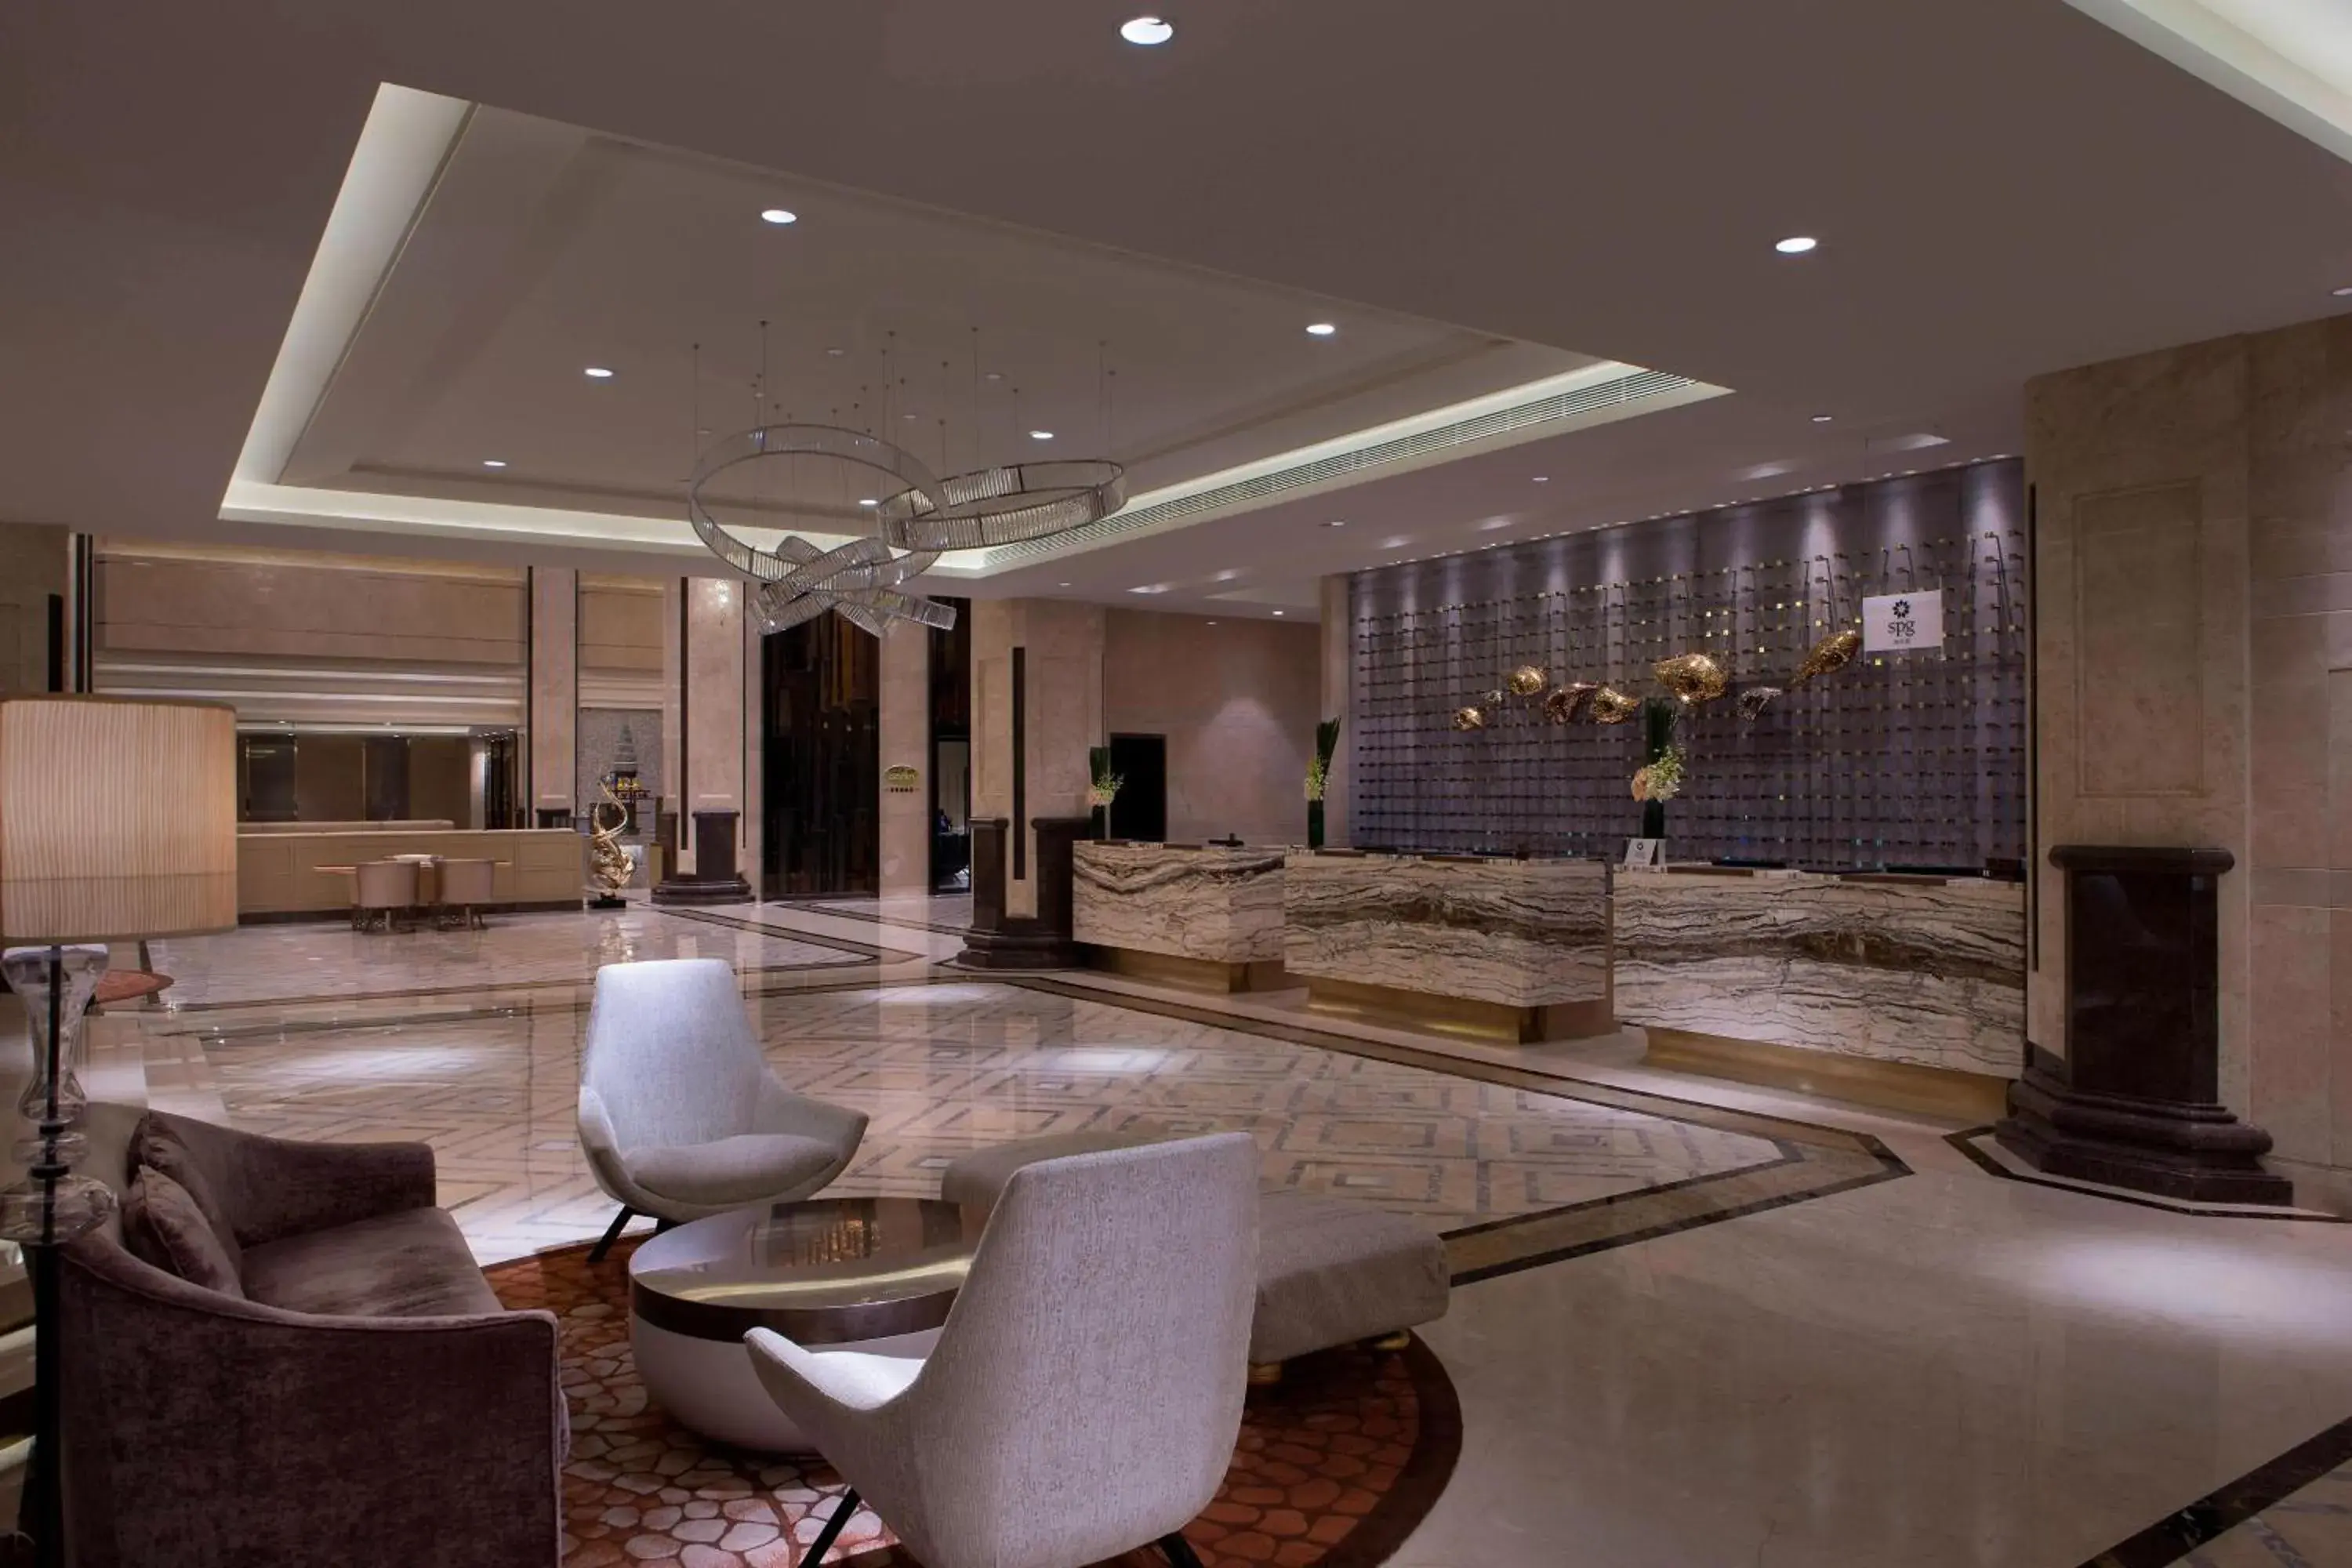 Lobby or reception in Sheraton Nanchang Hotel